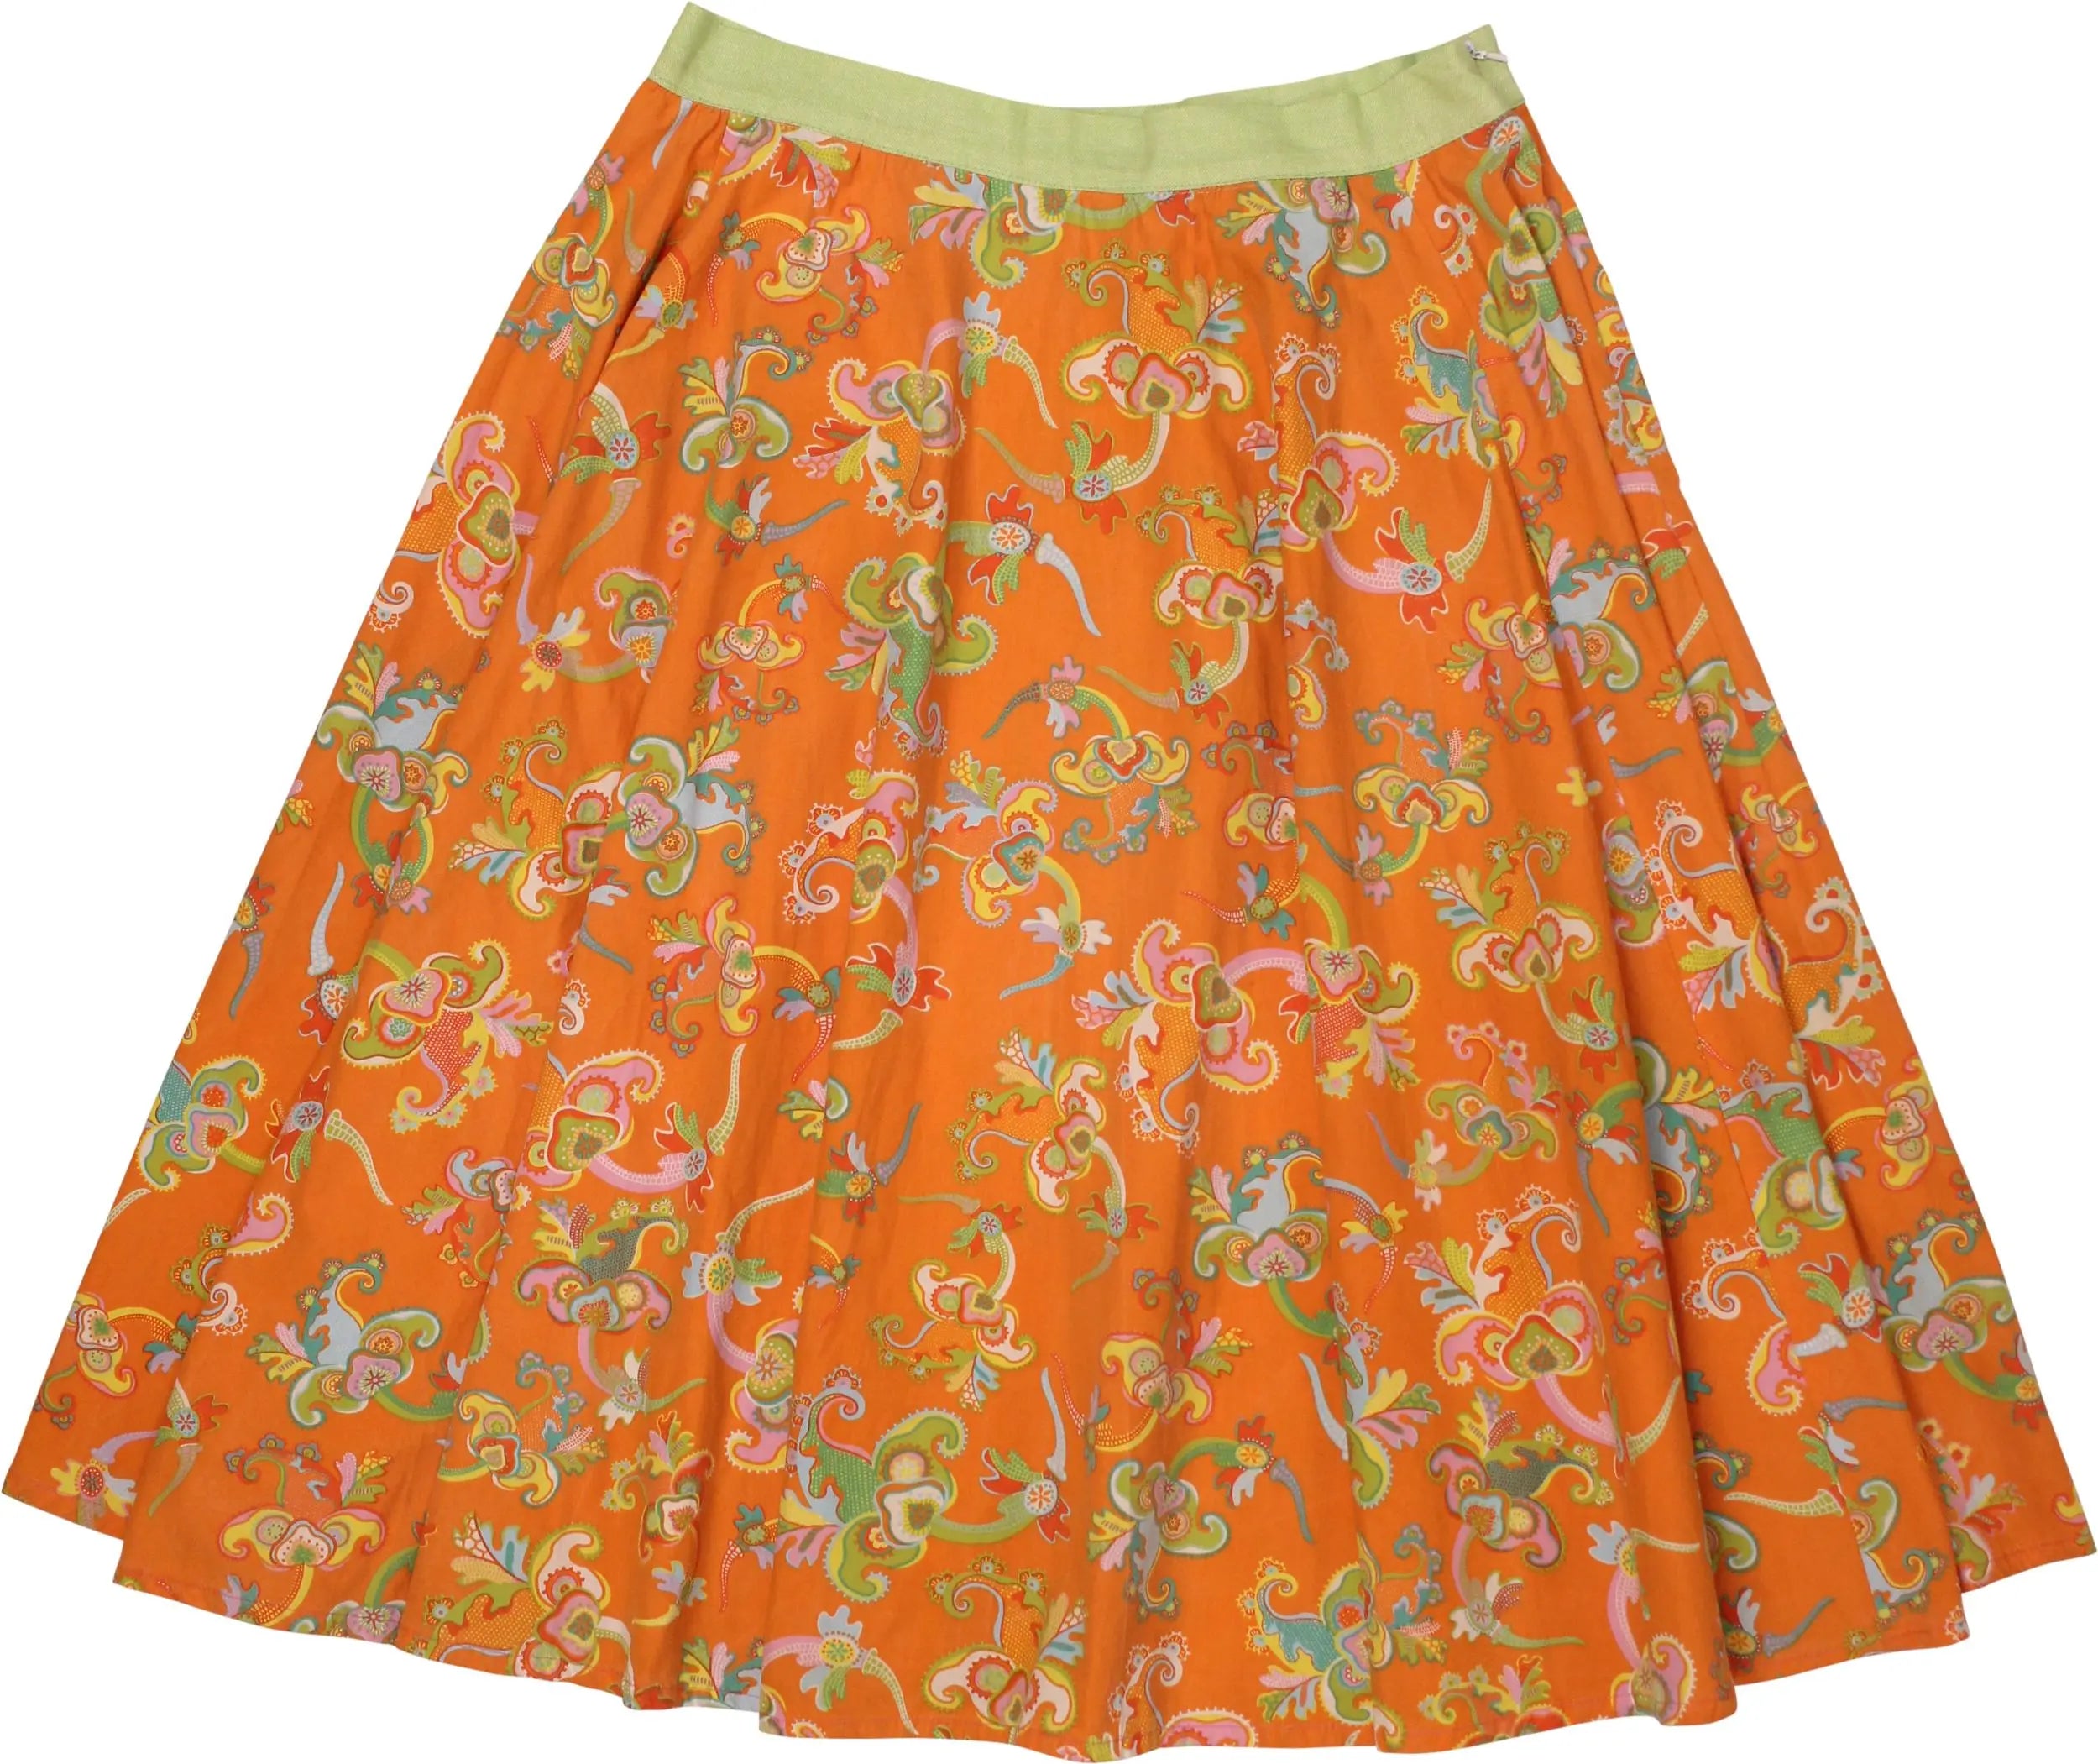 Handmade - Handmade Pleated Skirt- ThriftTale.com - Vintage and second handclothing